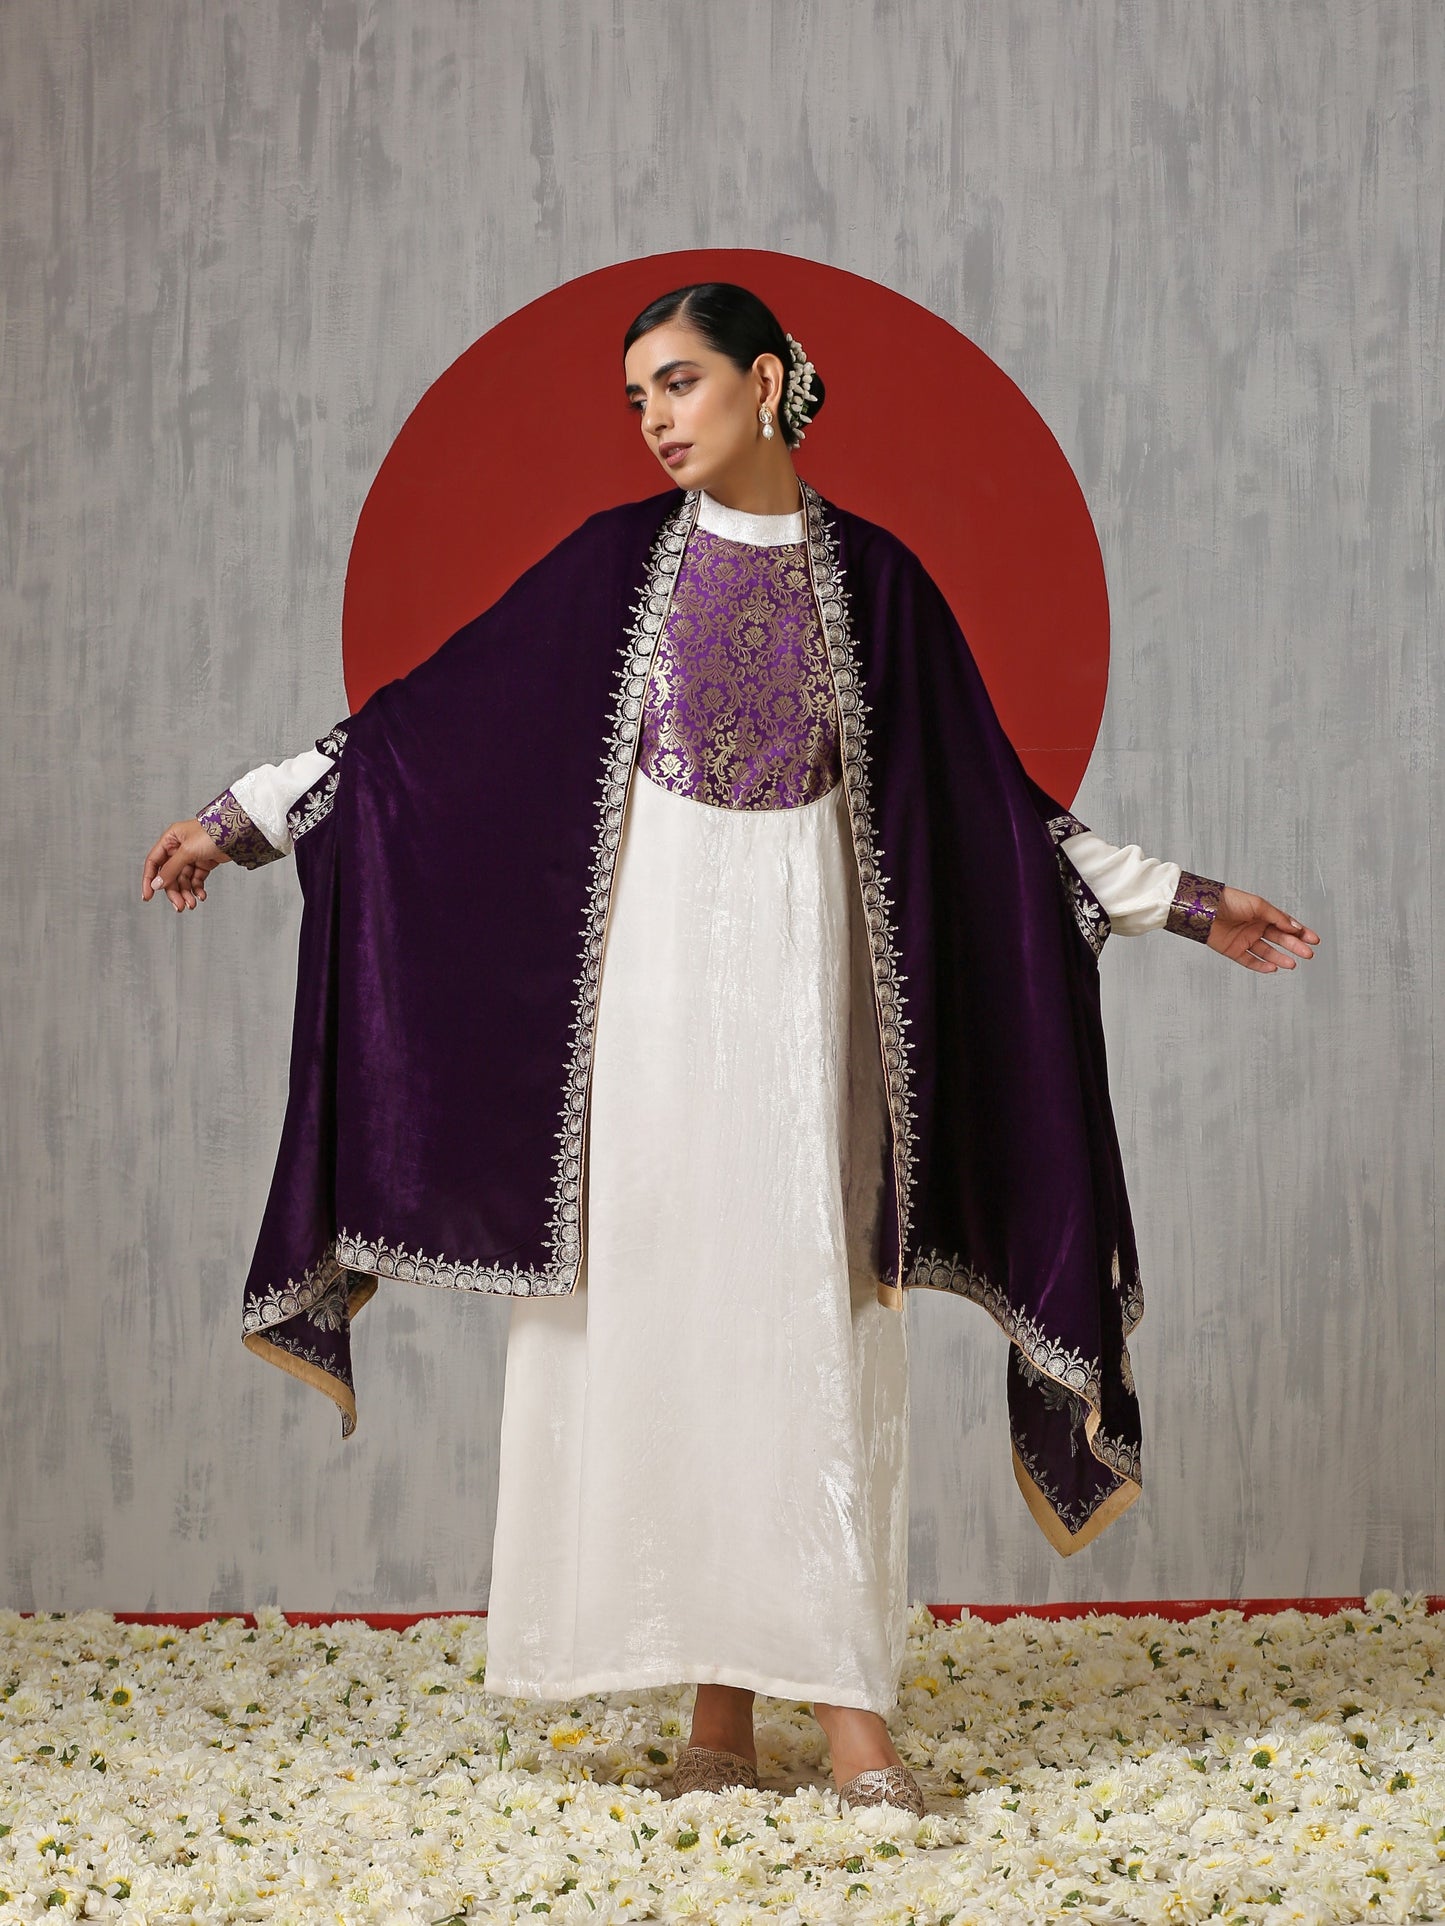 Makhmal White Dress with Purple Cape